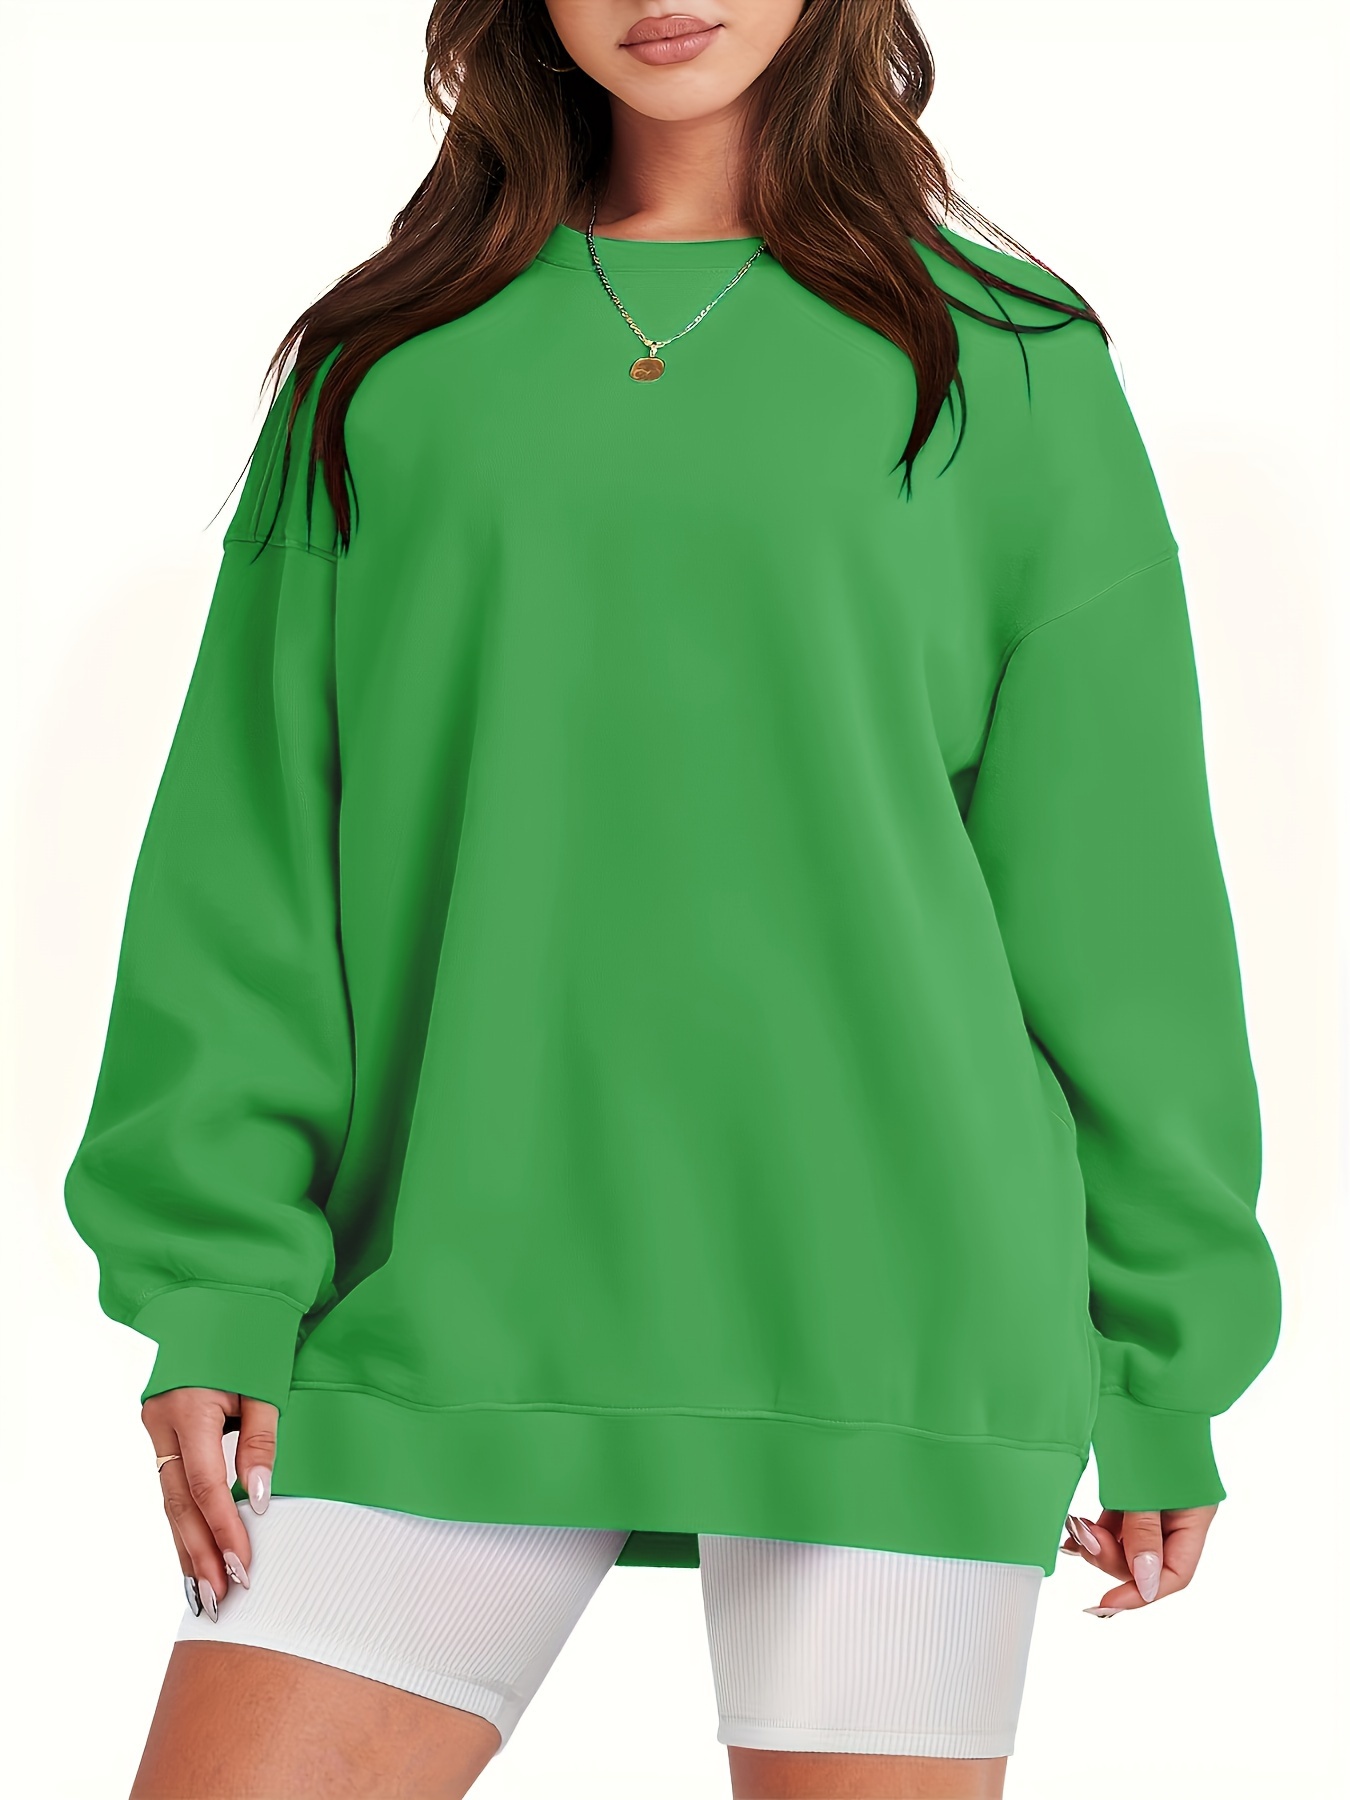 Cute, Oversize Sweatshirts for Women